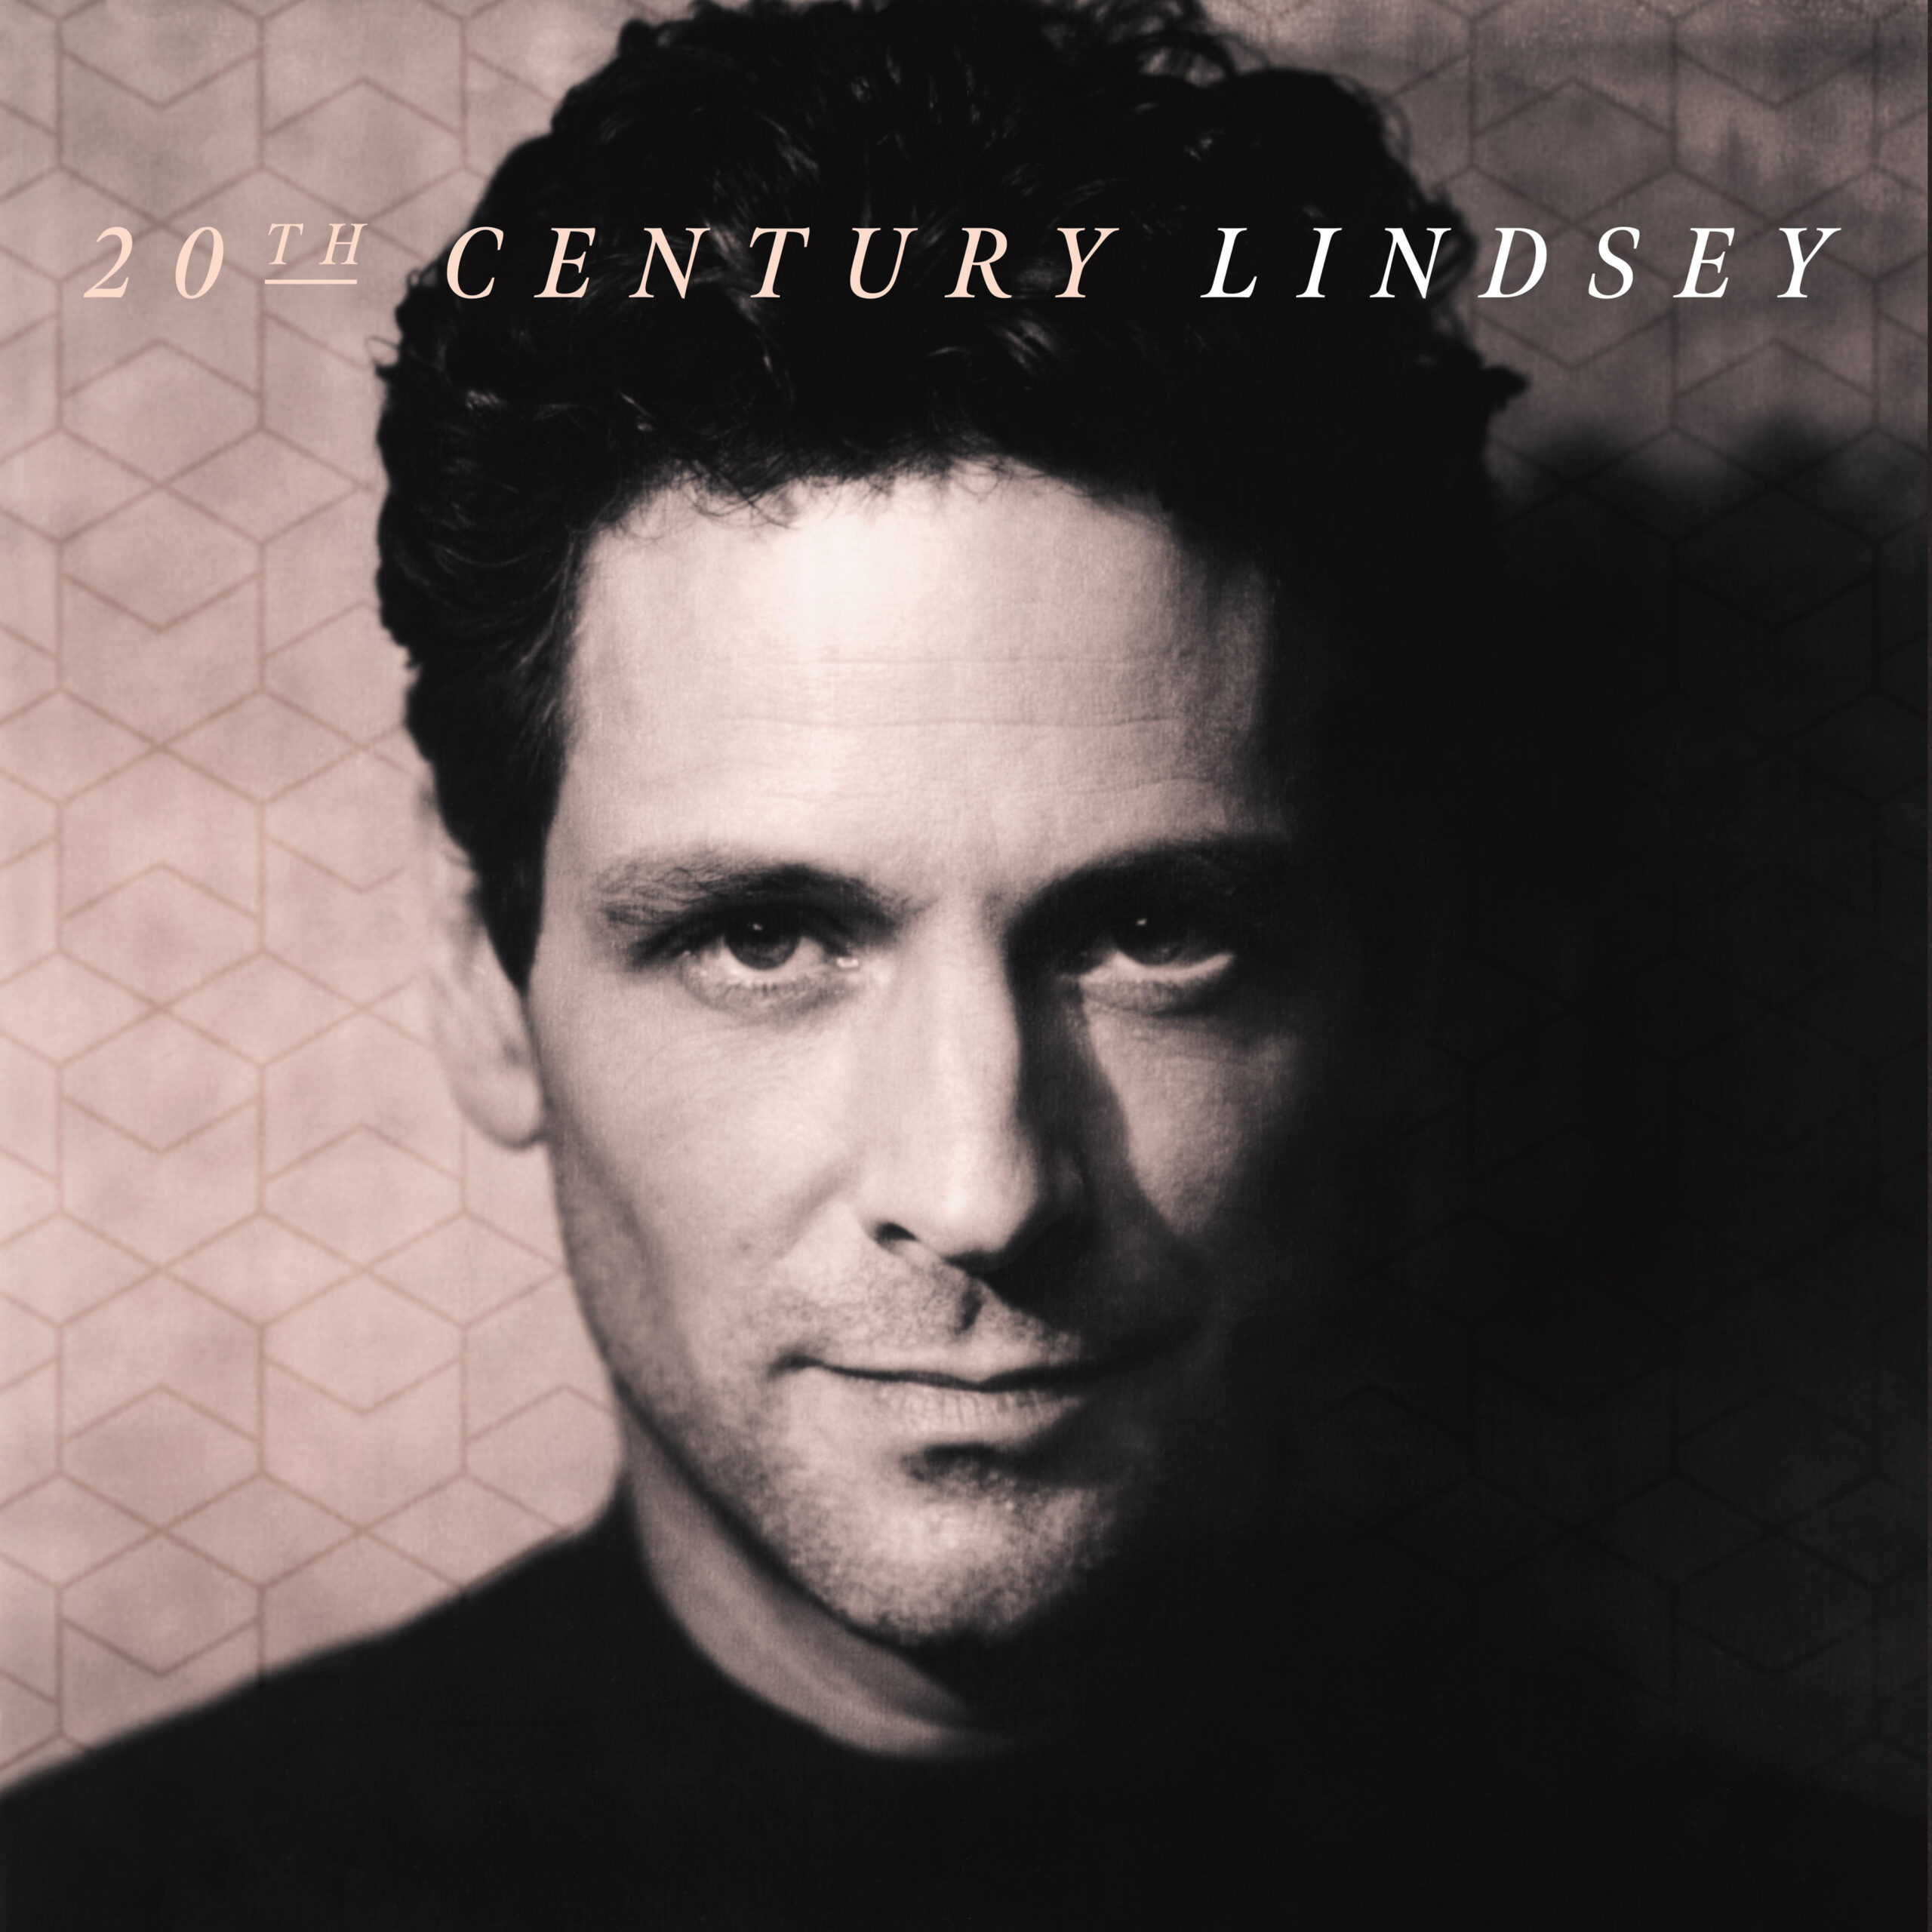 Lindsey Buckingham / 20th Century Lindsey 4CD box set